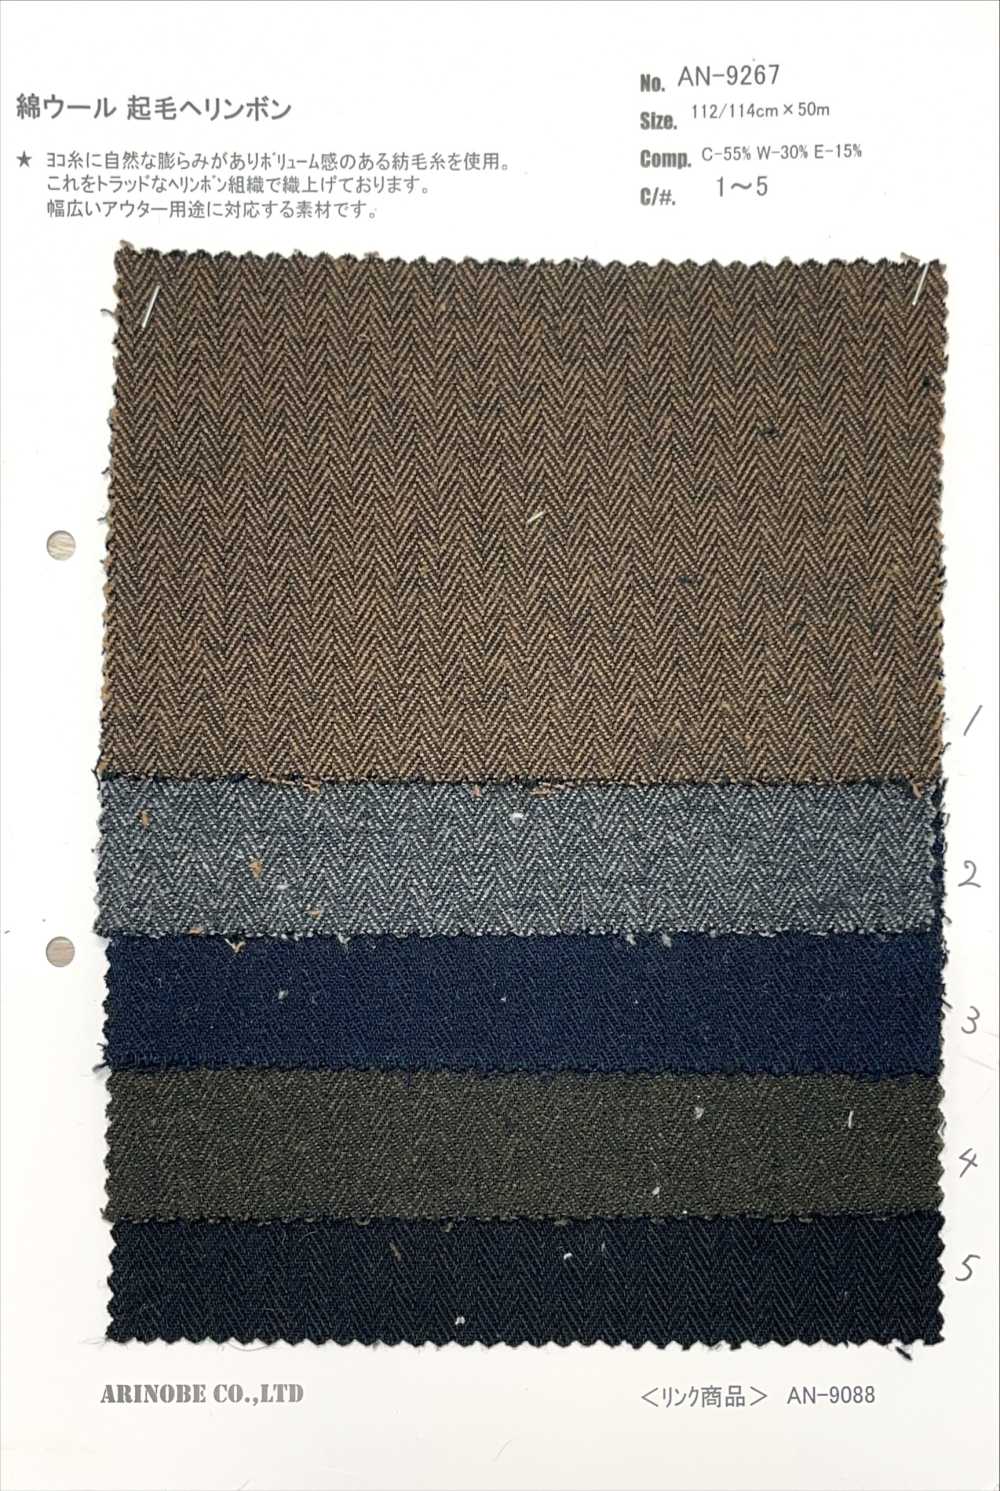 AN-9267 Cotton Wool Fuzzy Herringbone[Textile / Fabric] ARINOBE CO., LTD.